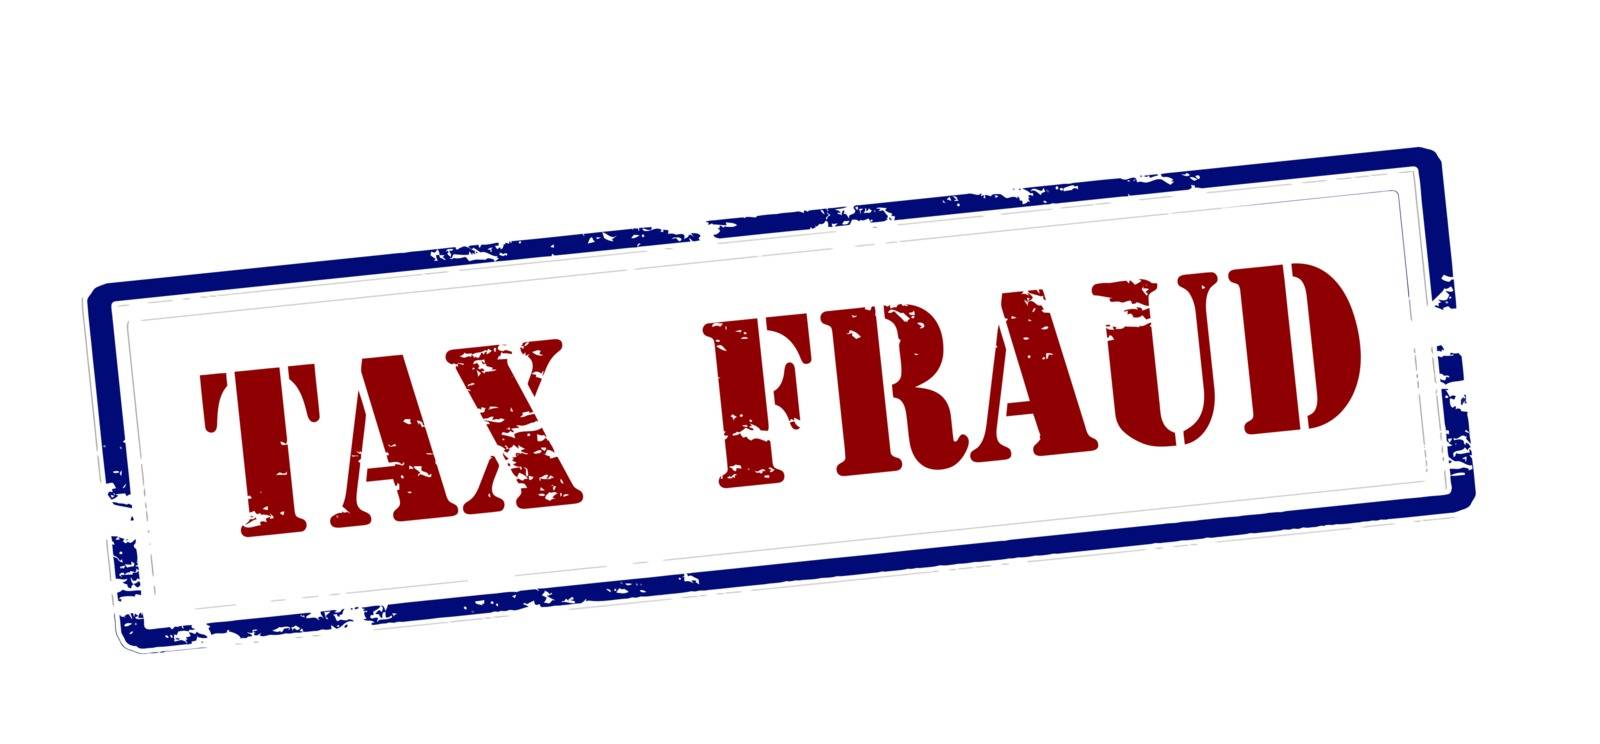 Tax fraud by carmenbobo